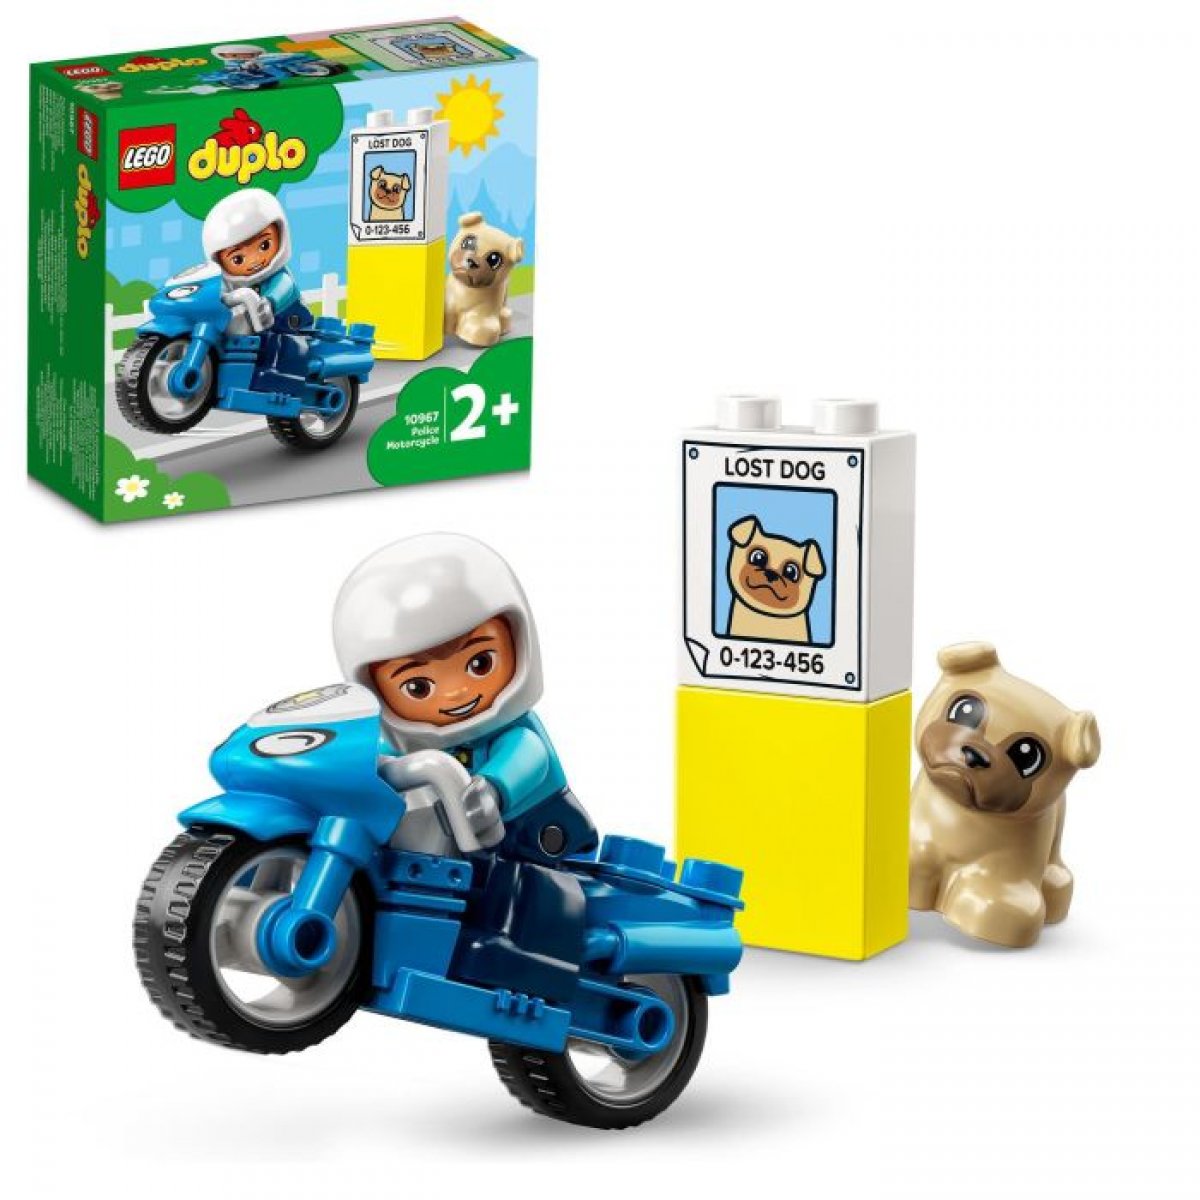 LEGO 10967 - Duplo Polizeimotorrad